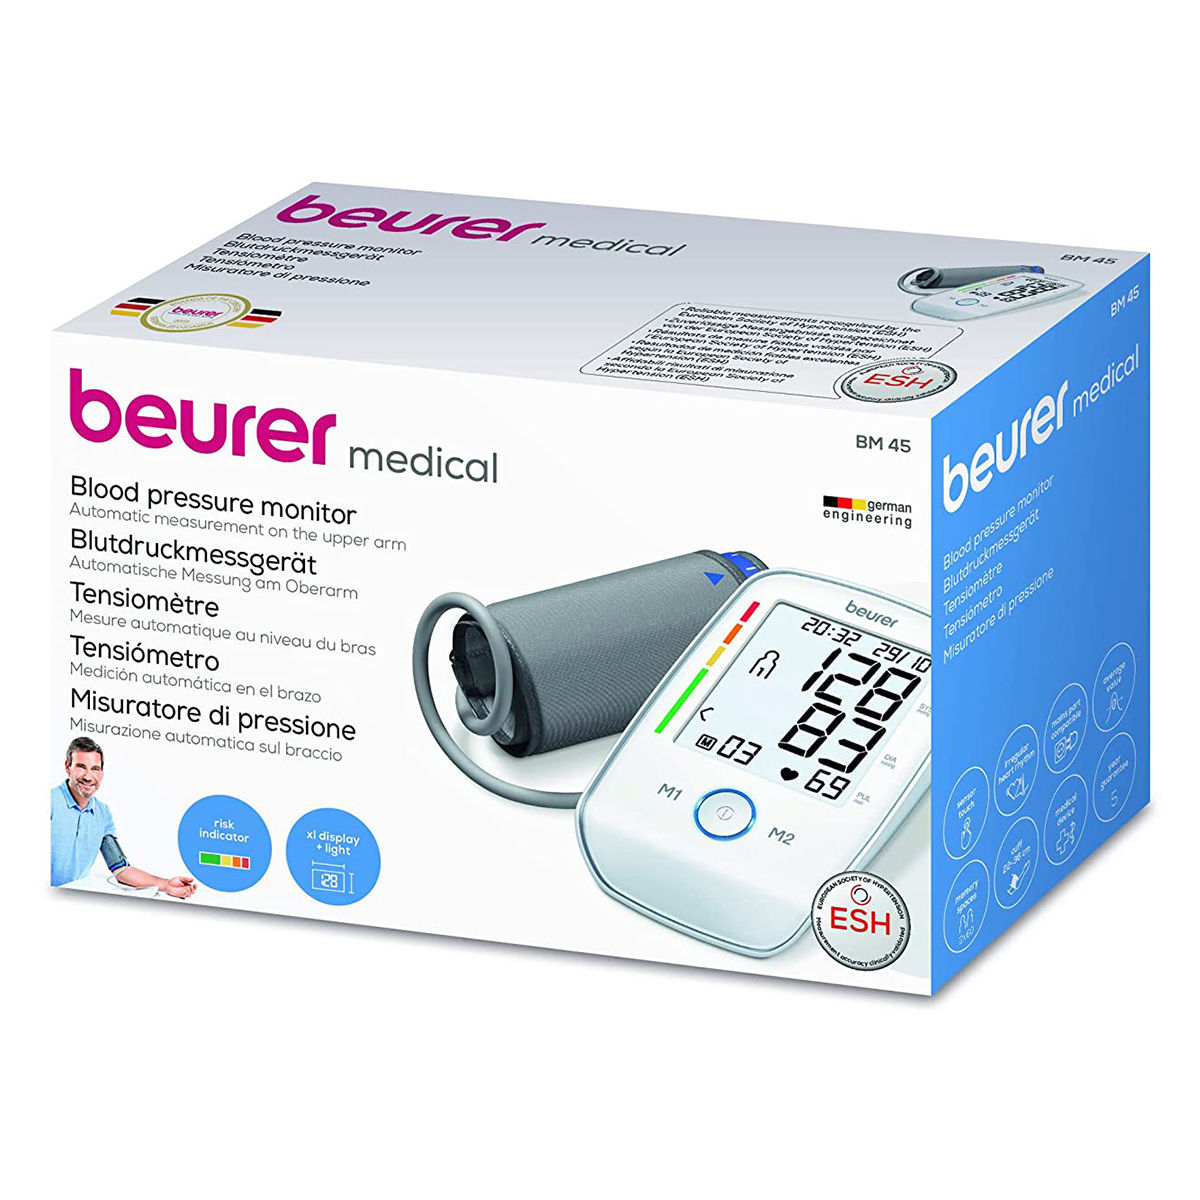 Beurer BM 45 Upper Arm Blood Pressure Monitor, 1 Count, Pack of 1 